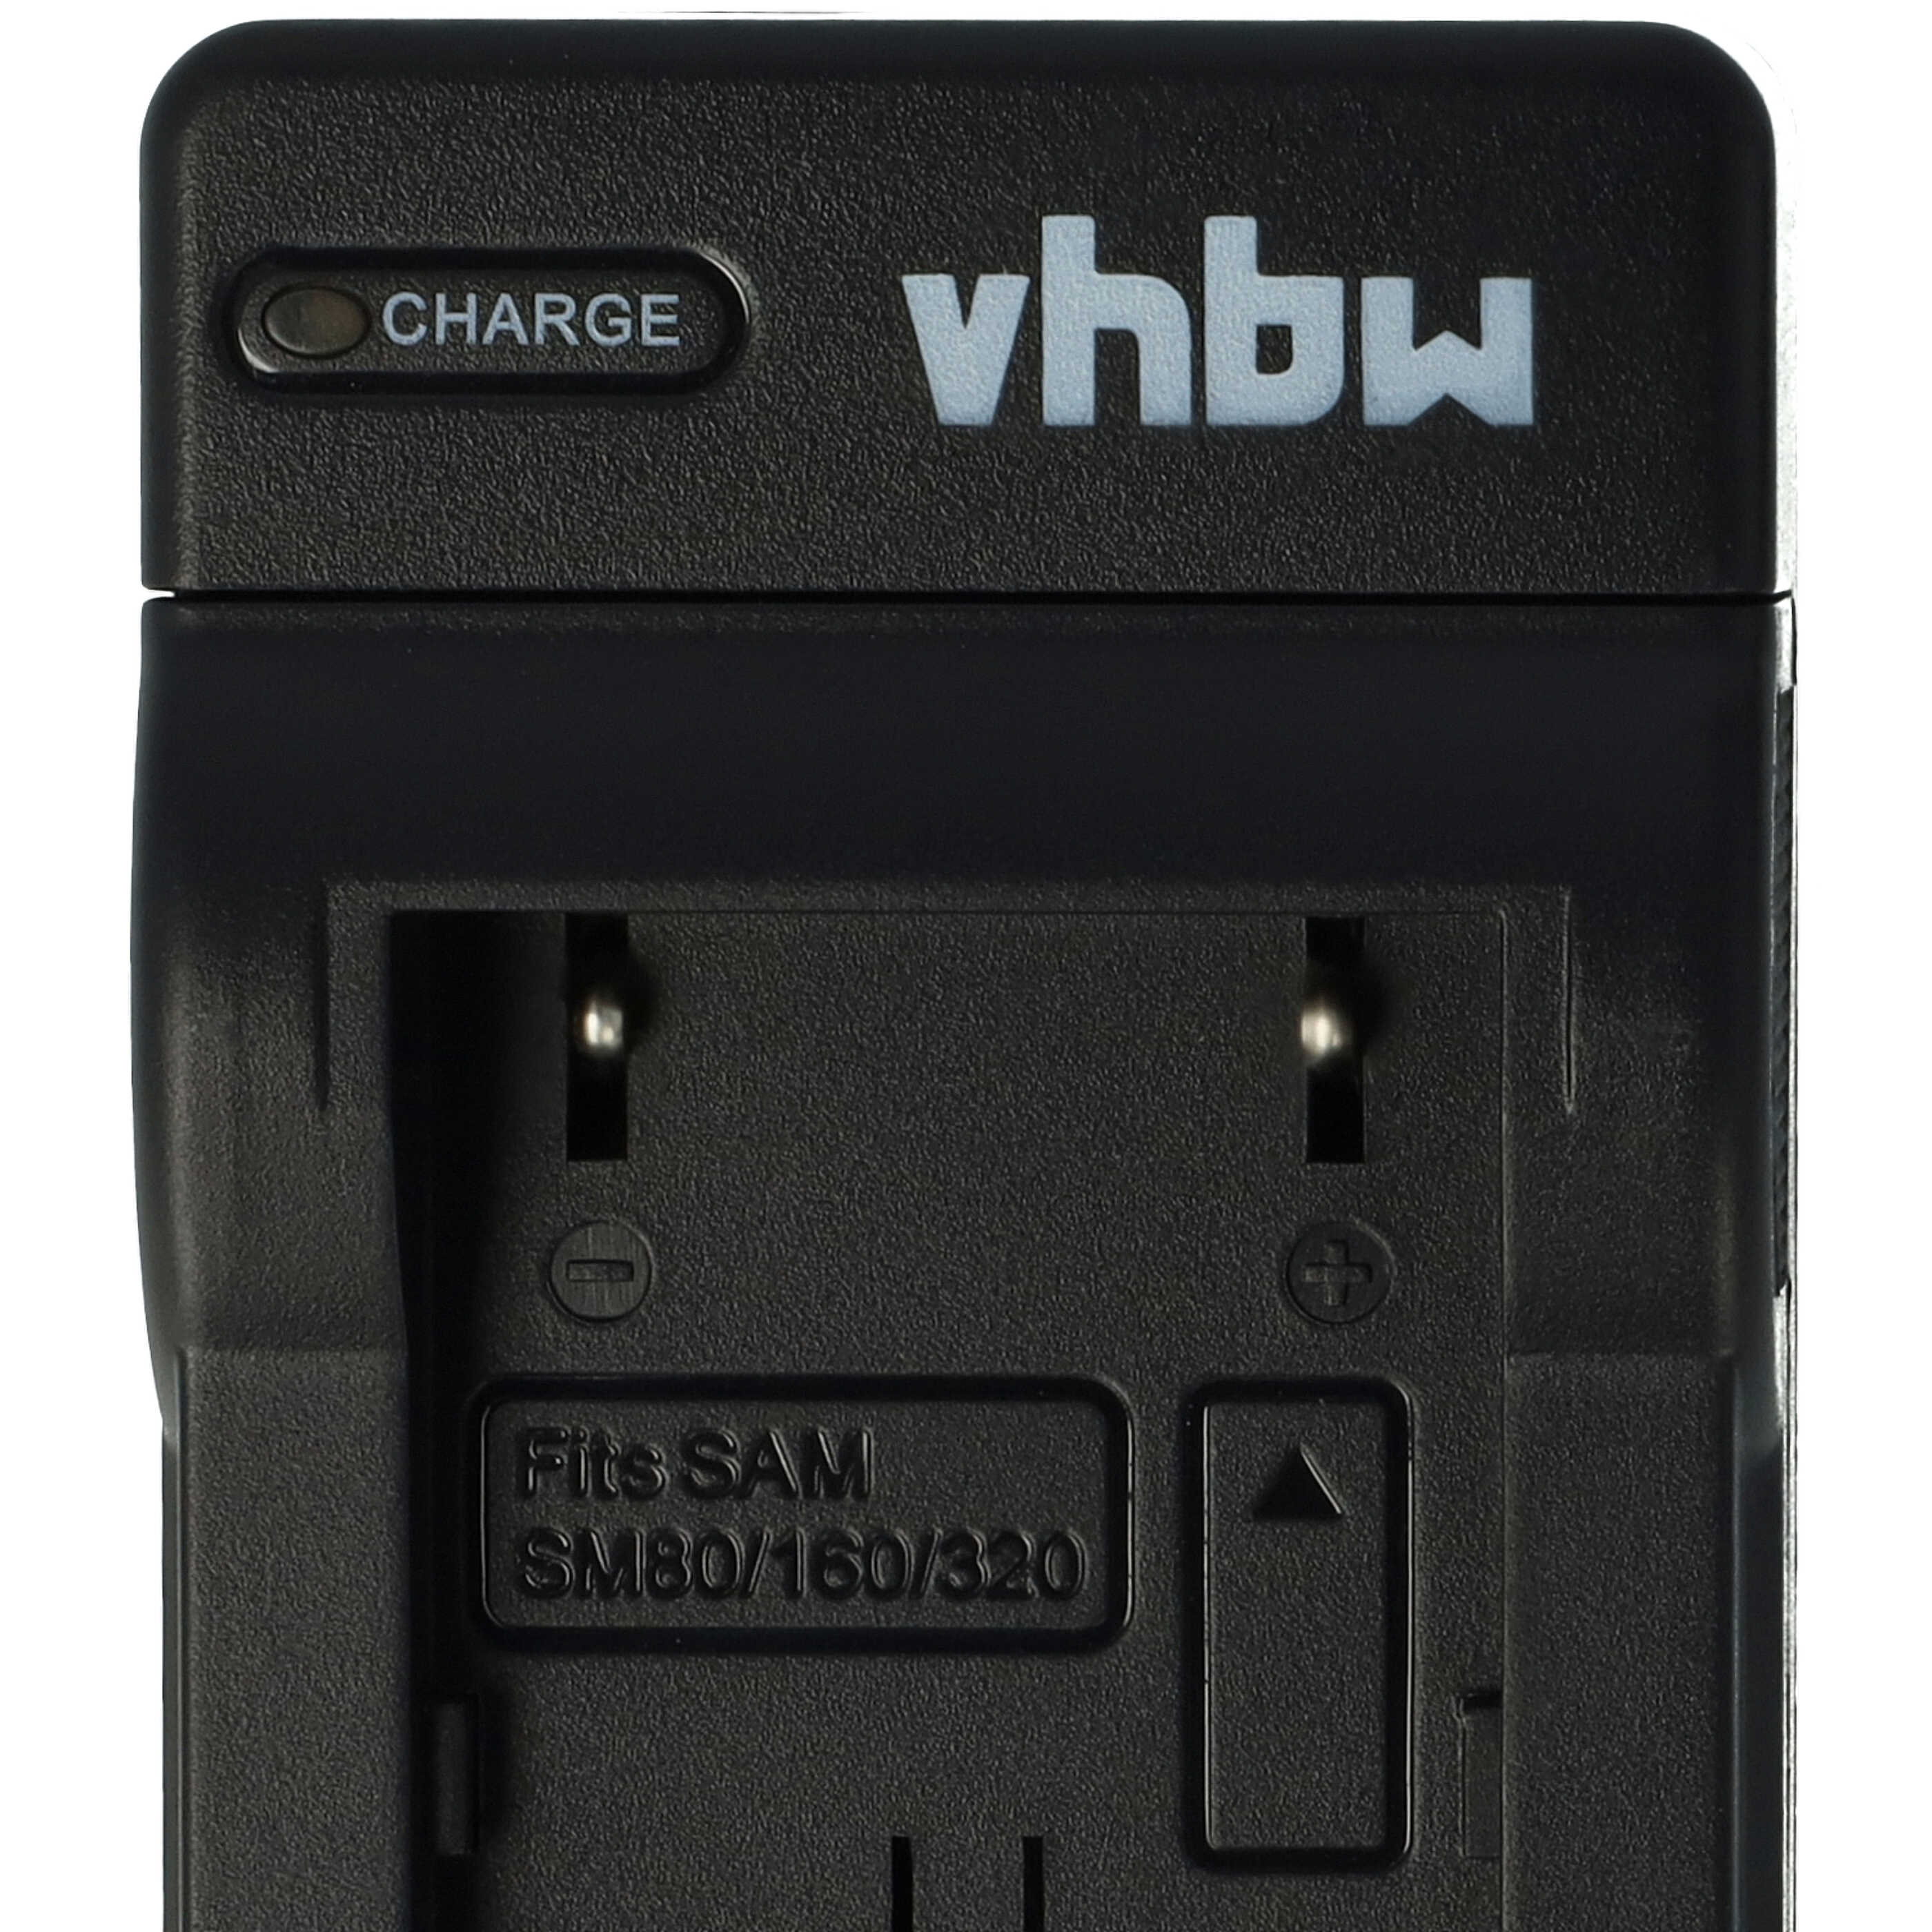 Battery Charger suitable for Samsung SB-LSM160 Camera etc. - 0.5 A, 8.4 V